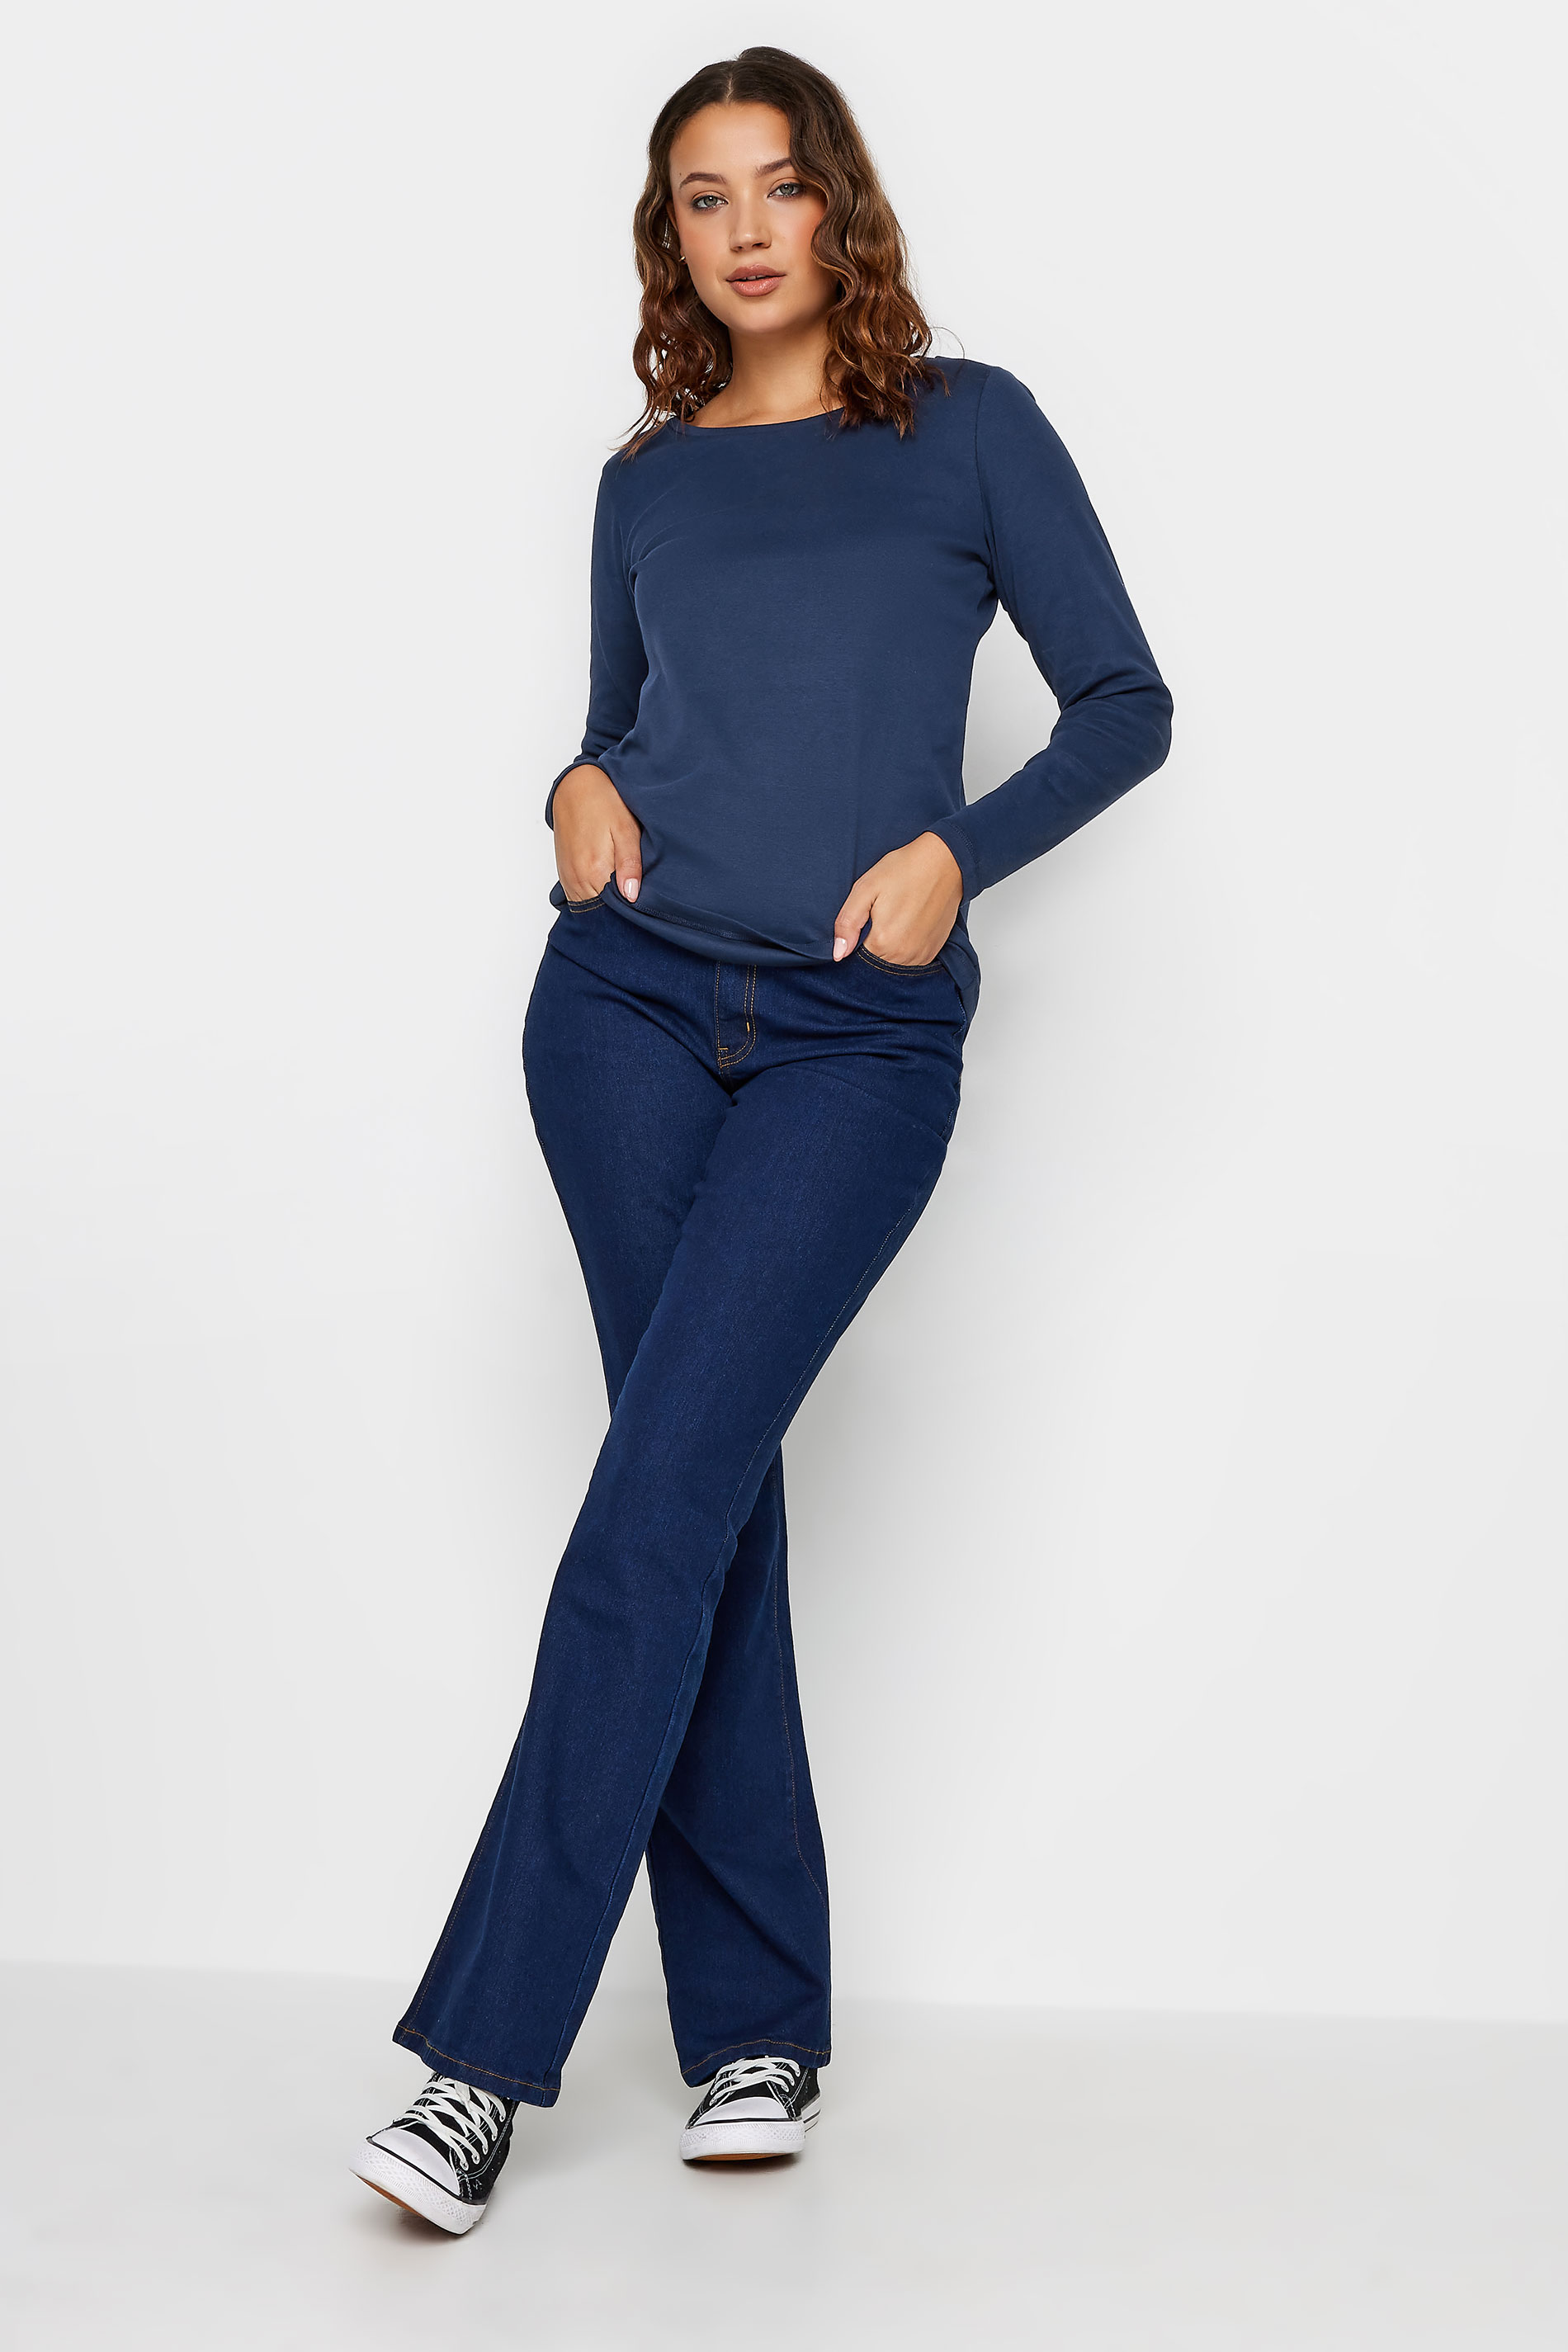 LTS Tall Navy Blue Long Sleeve Cotton T-Shirt | Long Tall Sally  2